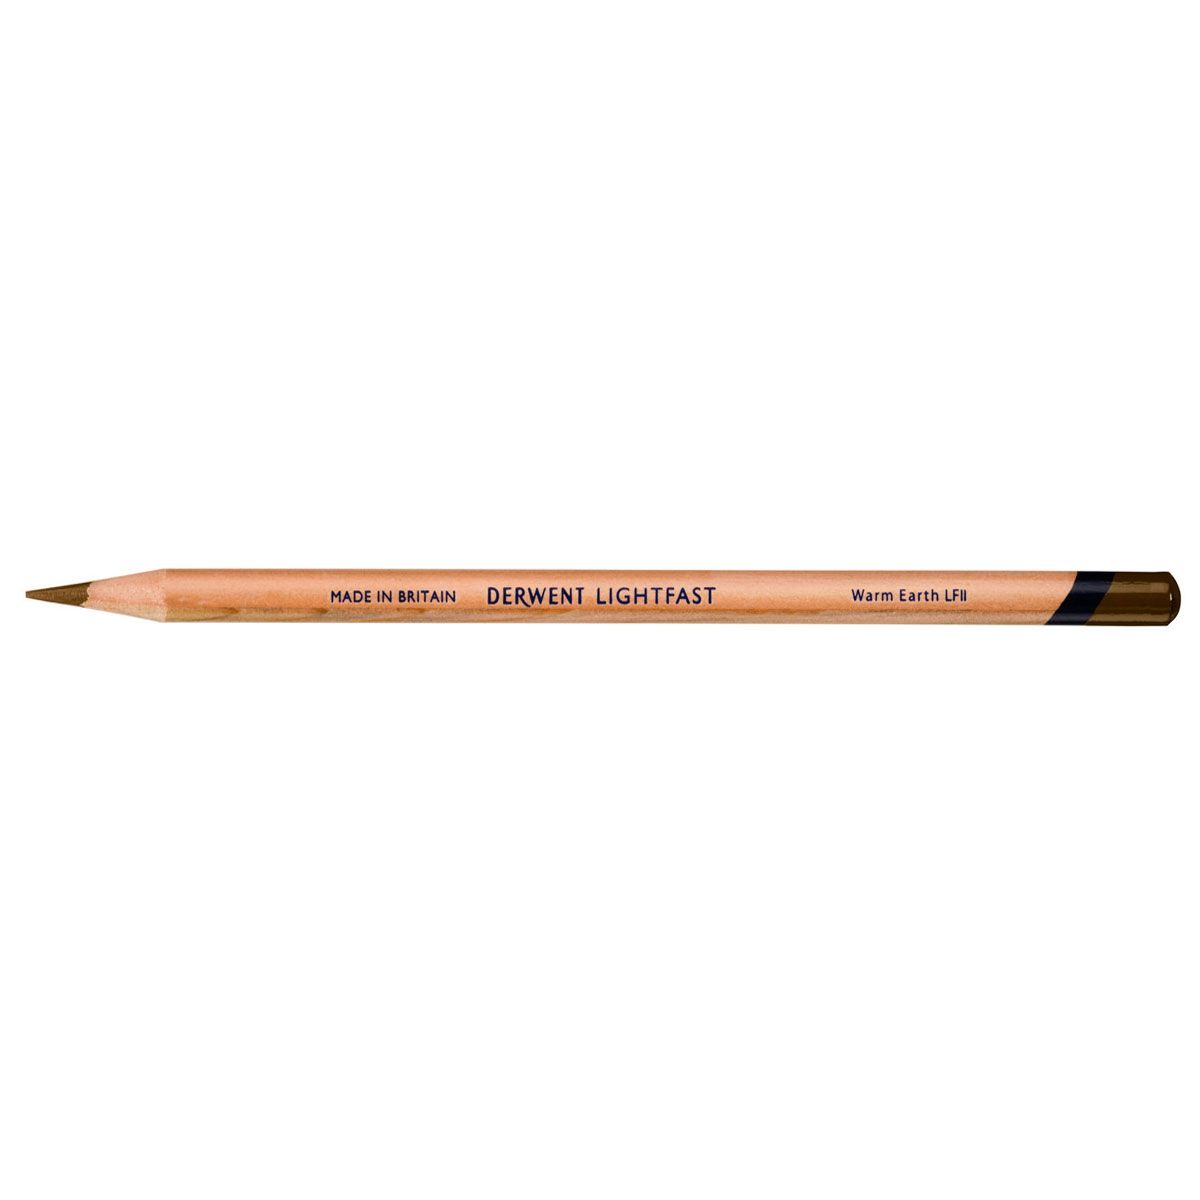 NEW Derwent Lightfast Pencil Colour: Warm Earth